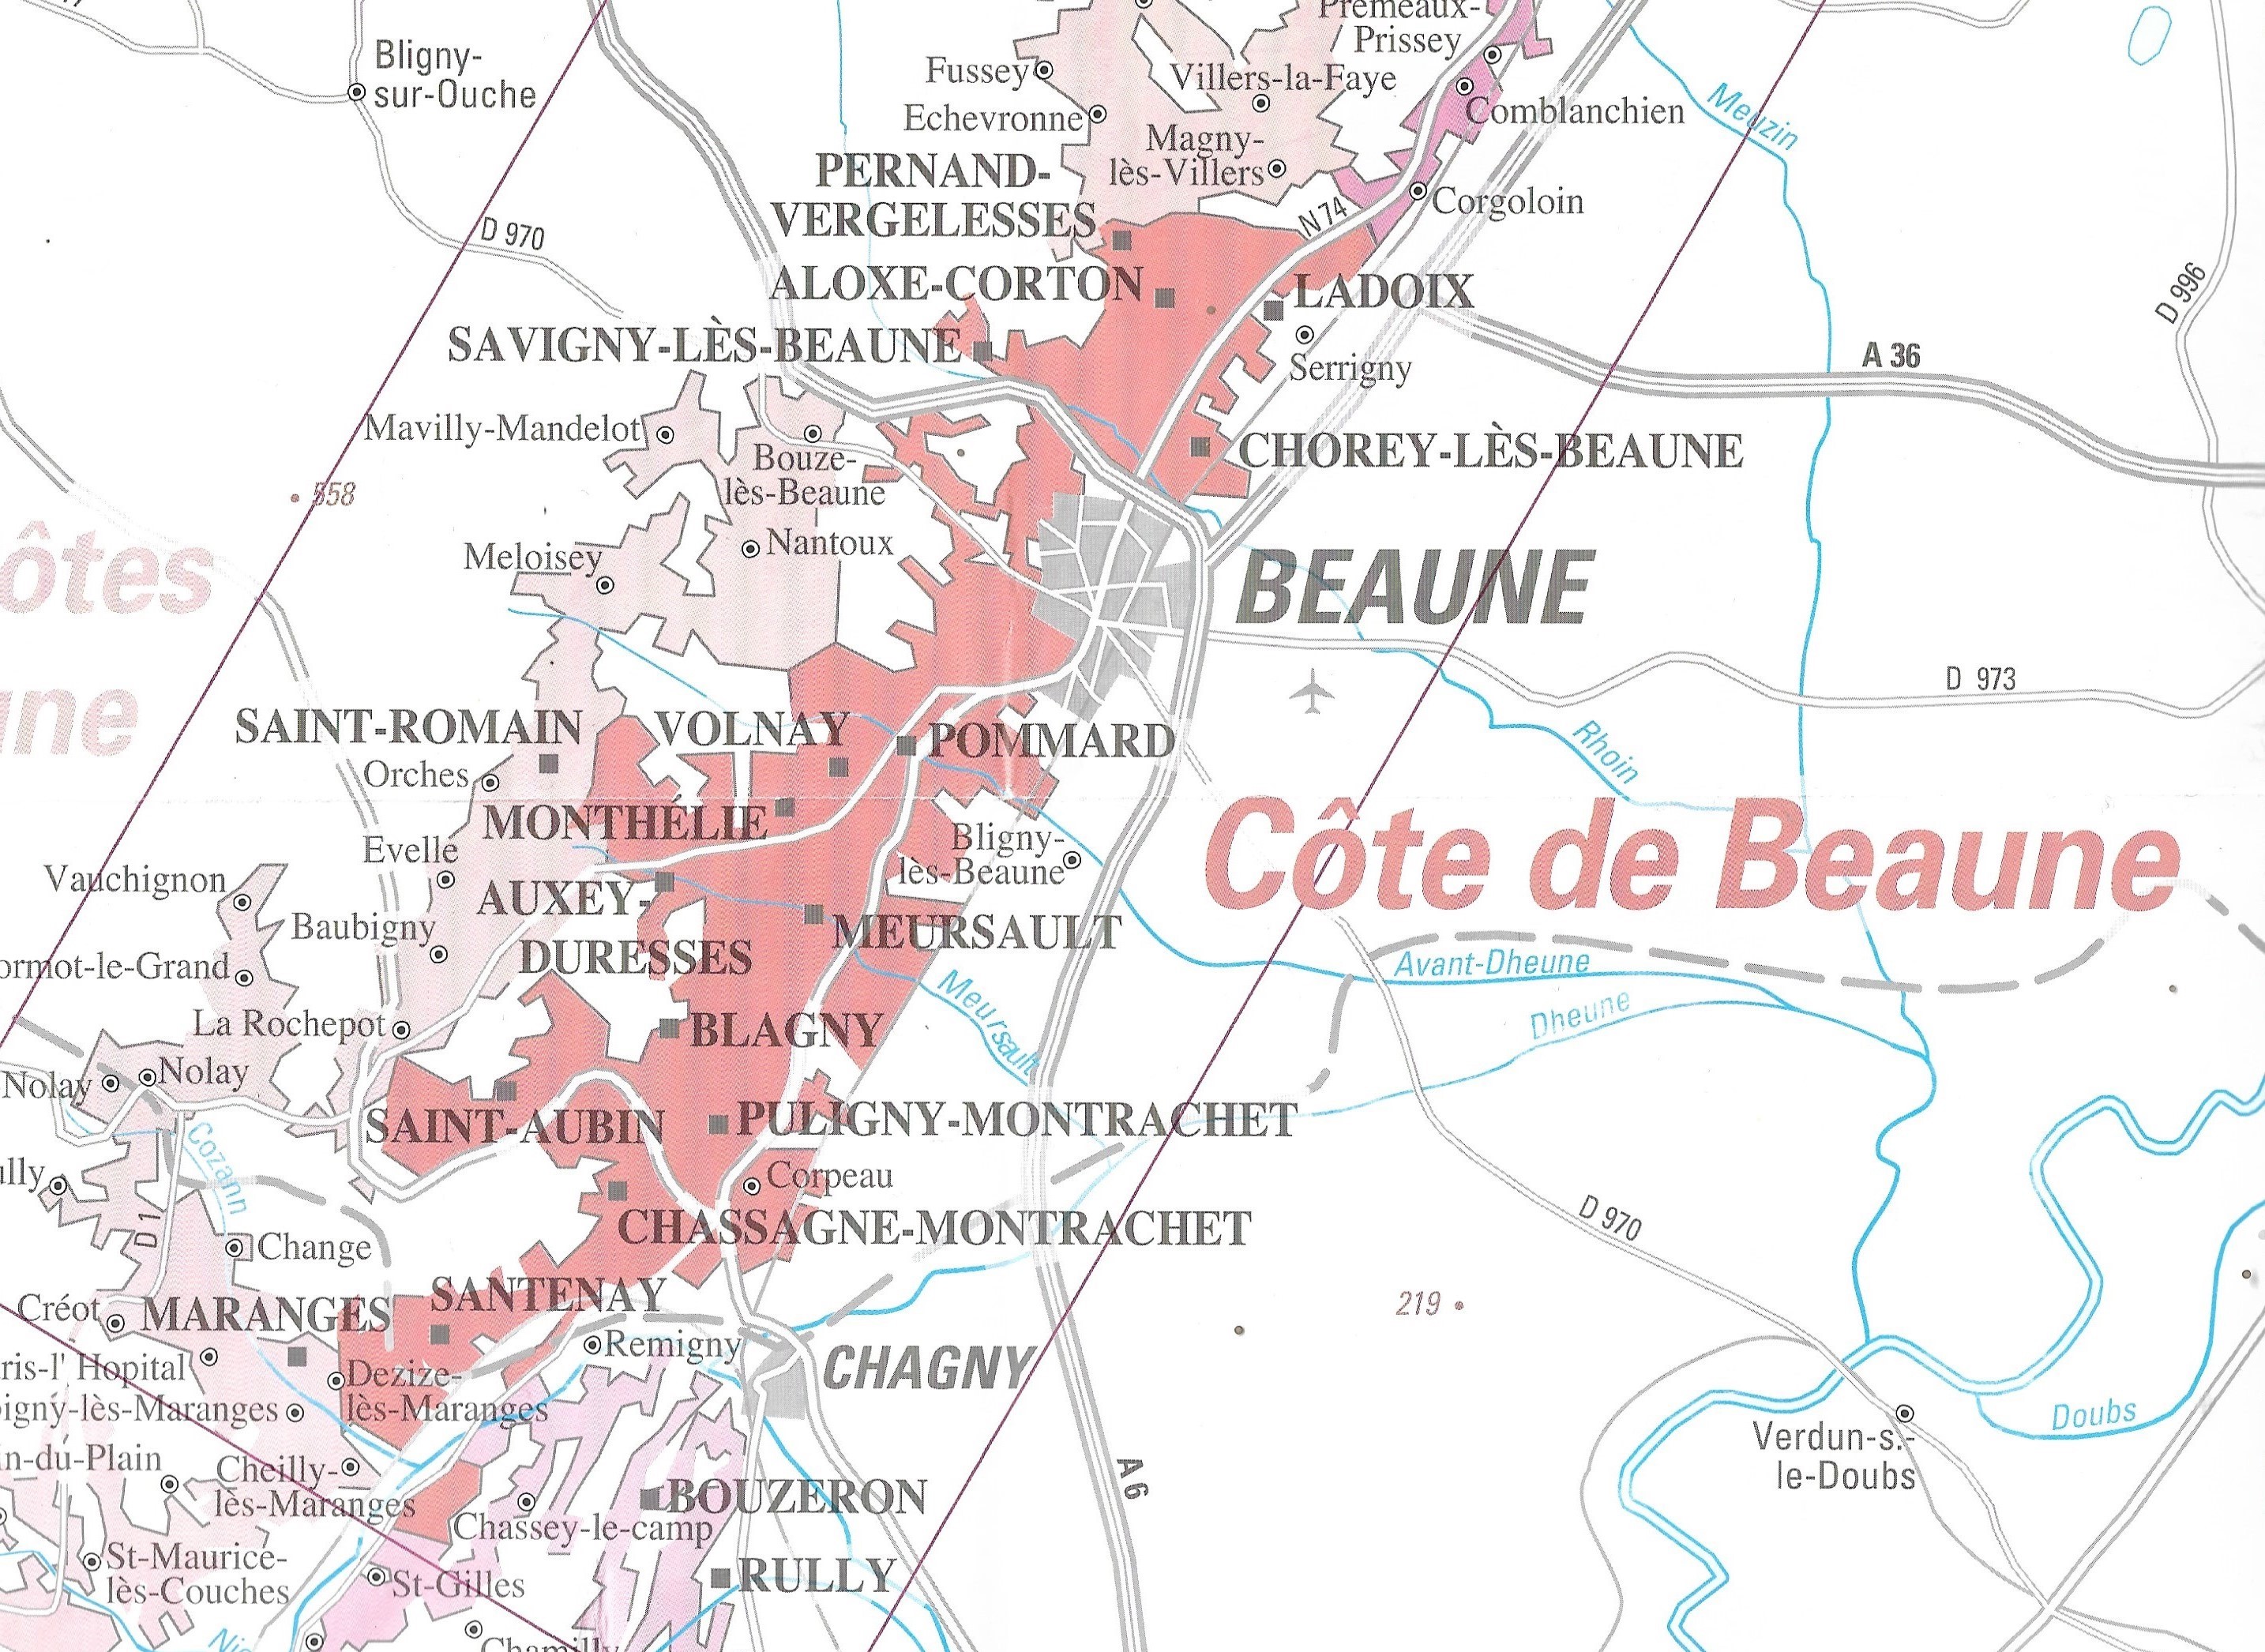 Kort over Côte de Beaume